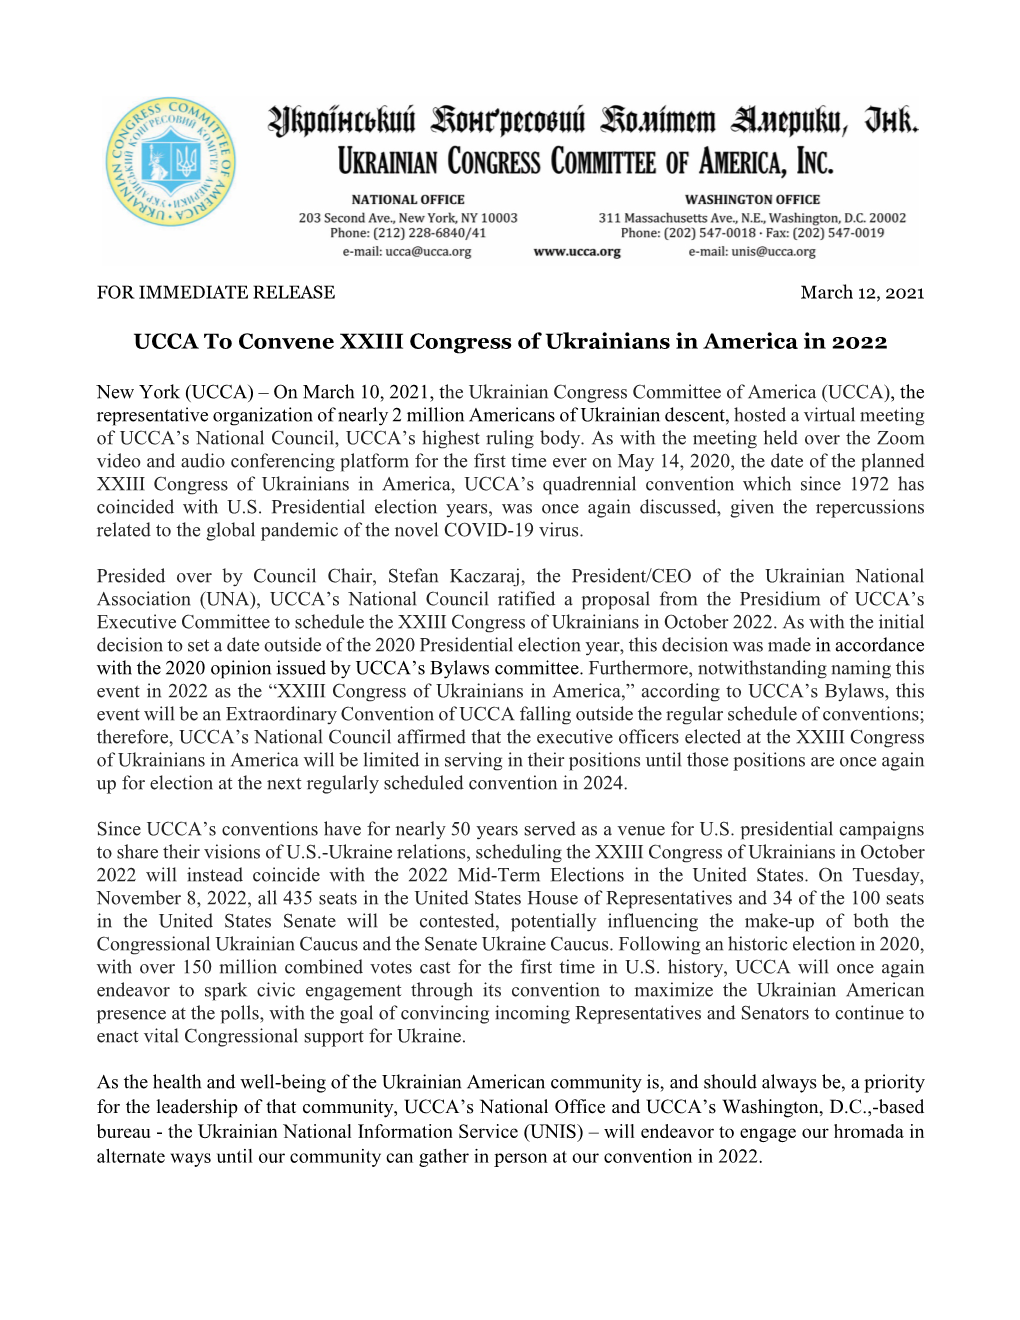 XXIII Congress of Ukrainians in America in 2022